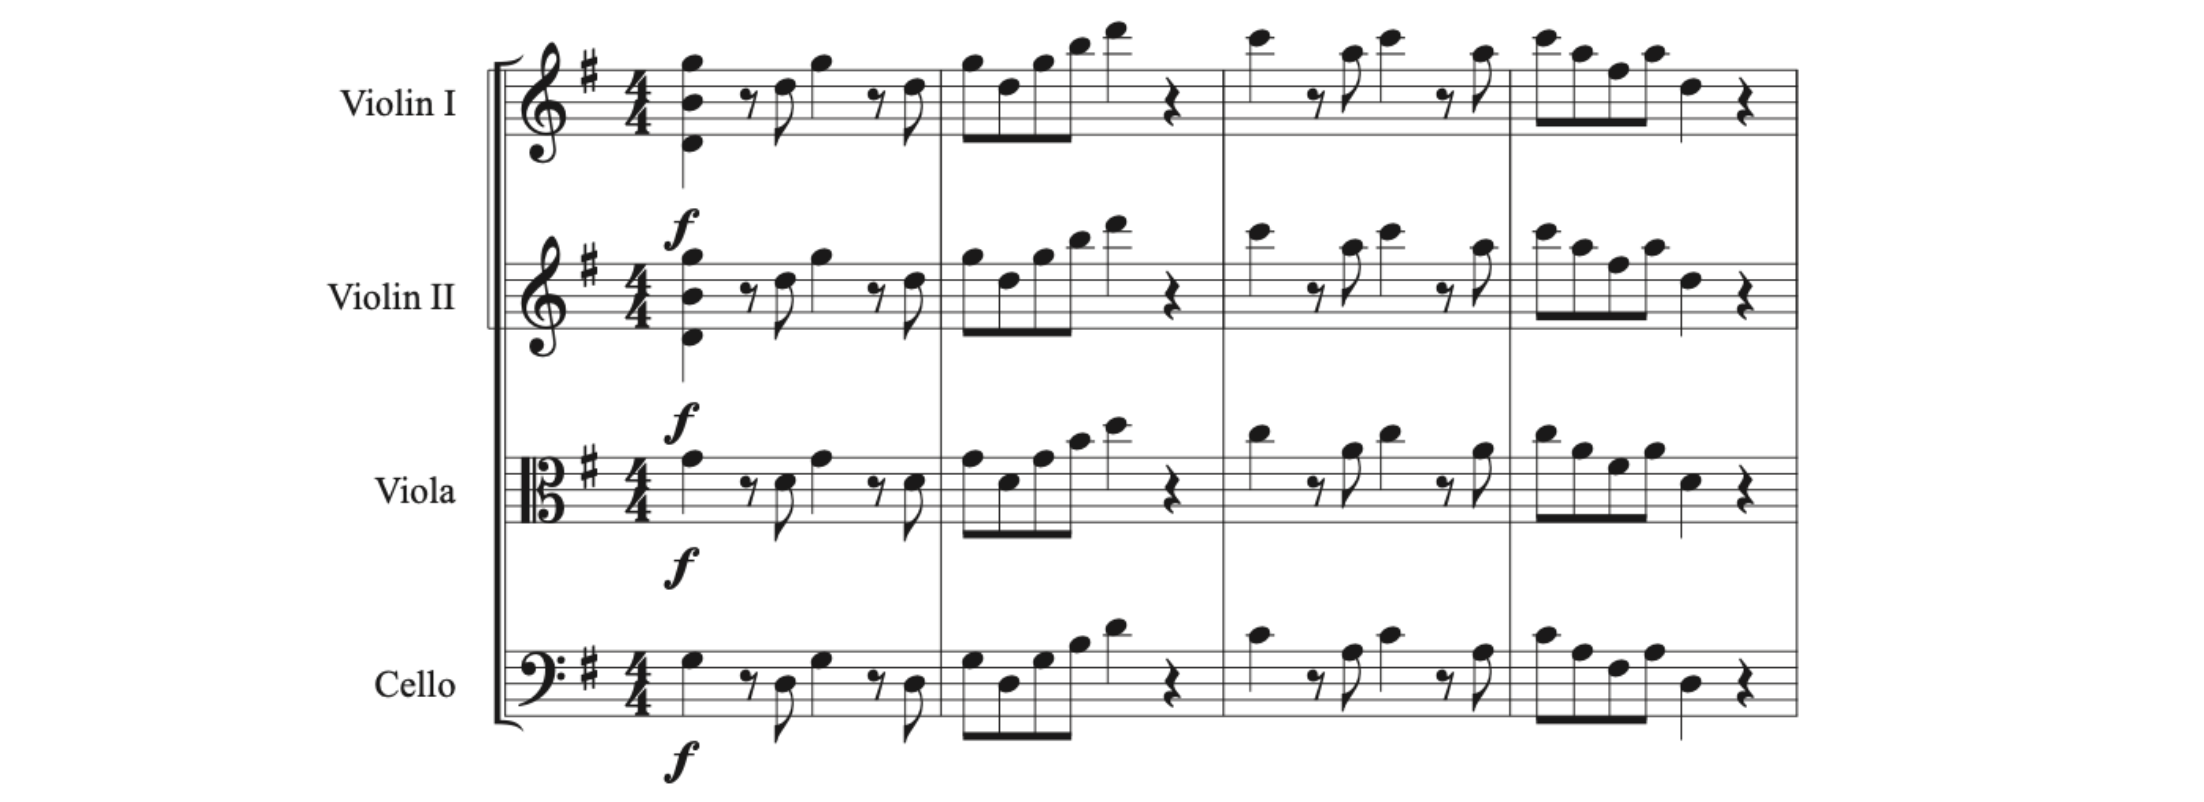 An example of a major key is Mozart's Eine kleine Nachtmusik, Kurshell 525, first movement - Allegro. Listen to the recording below.